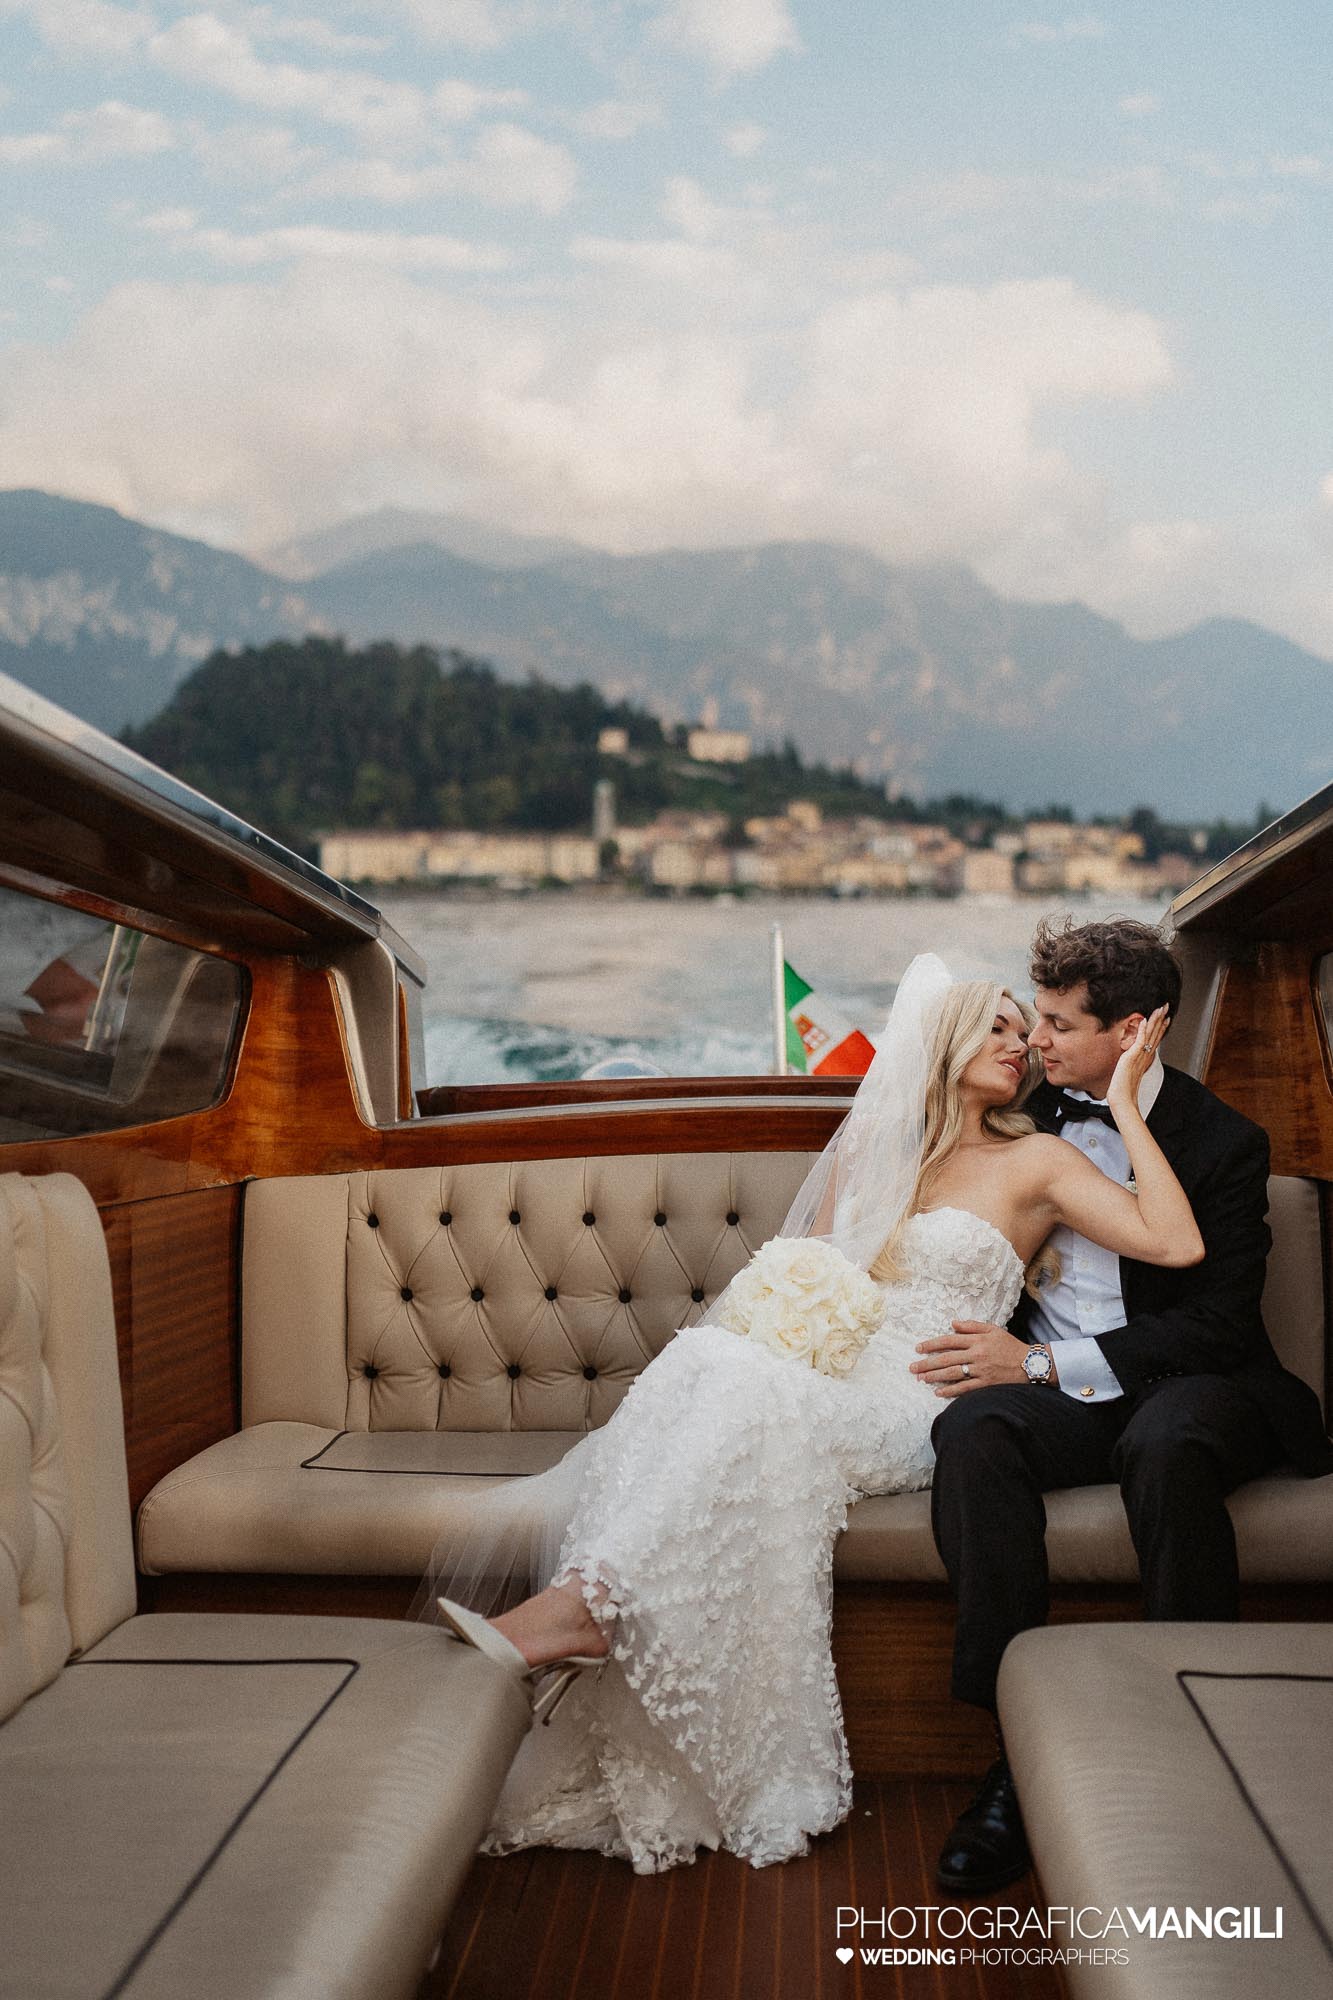 wedding photo villa serbelloni bellagio como lake london dylan 088